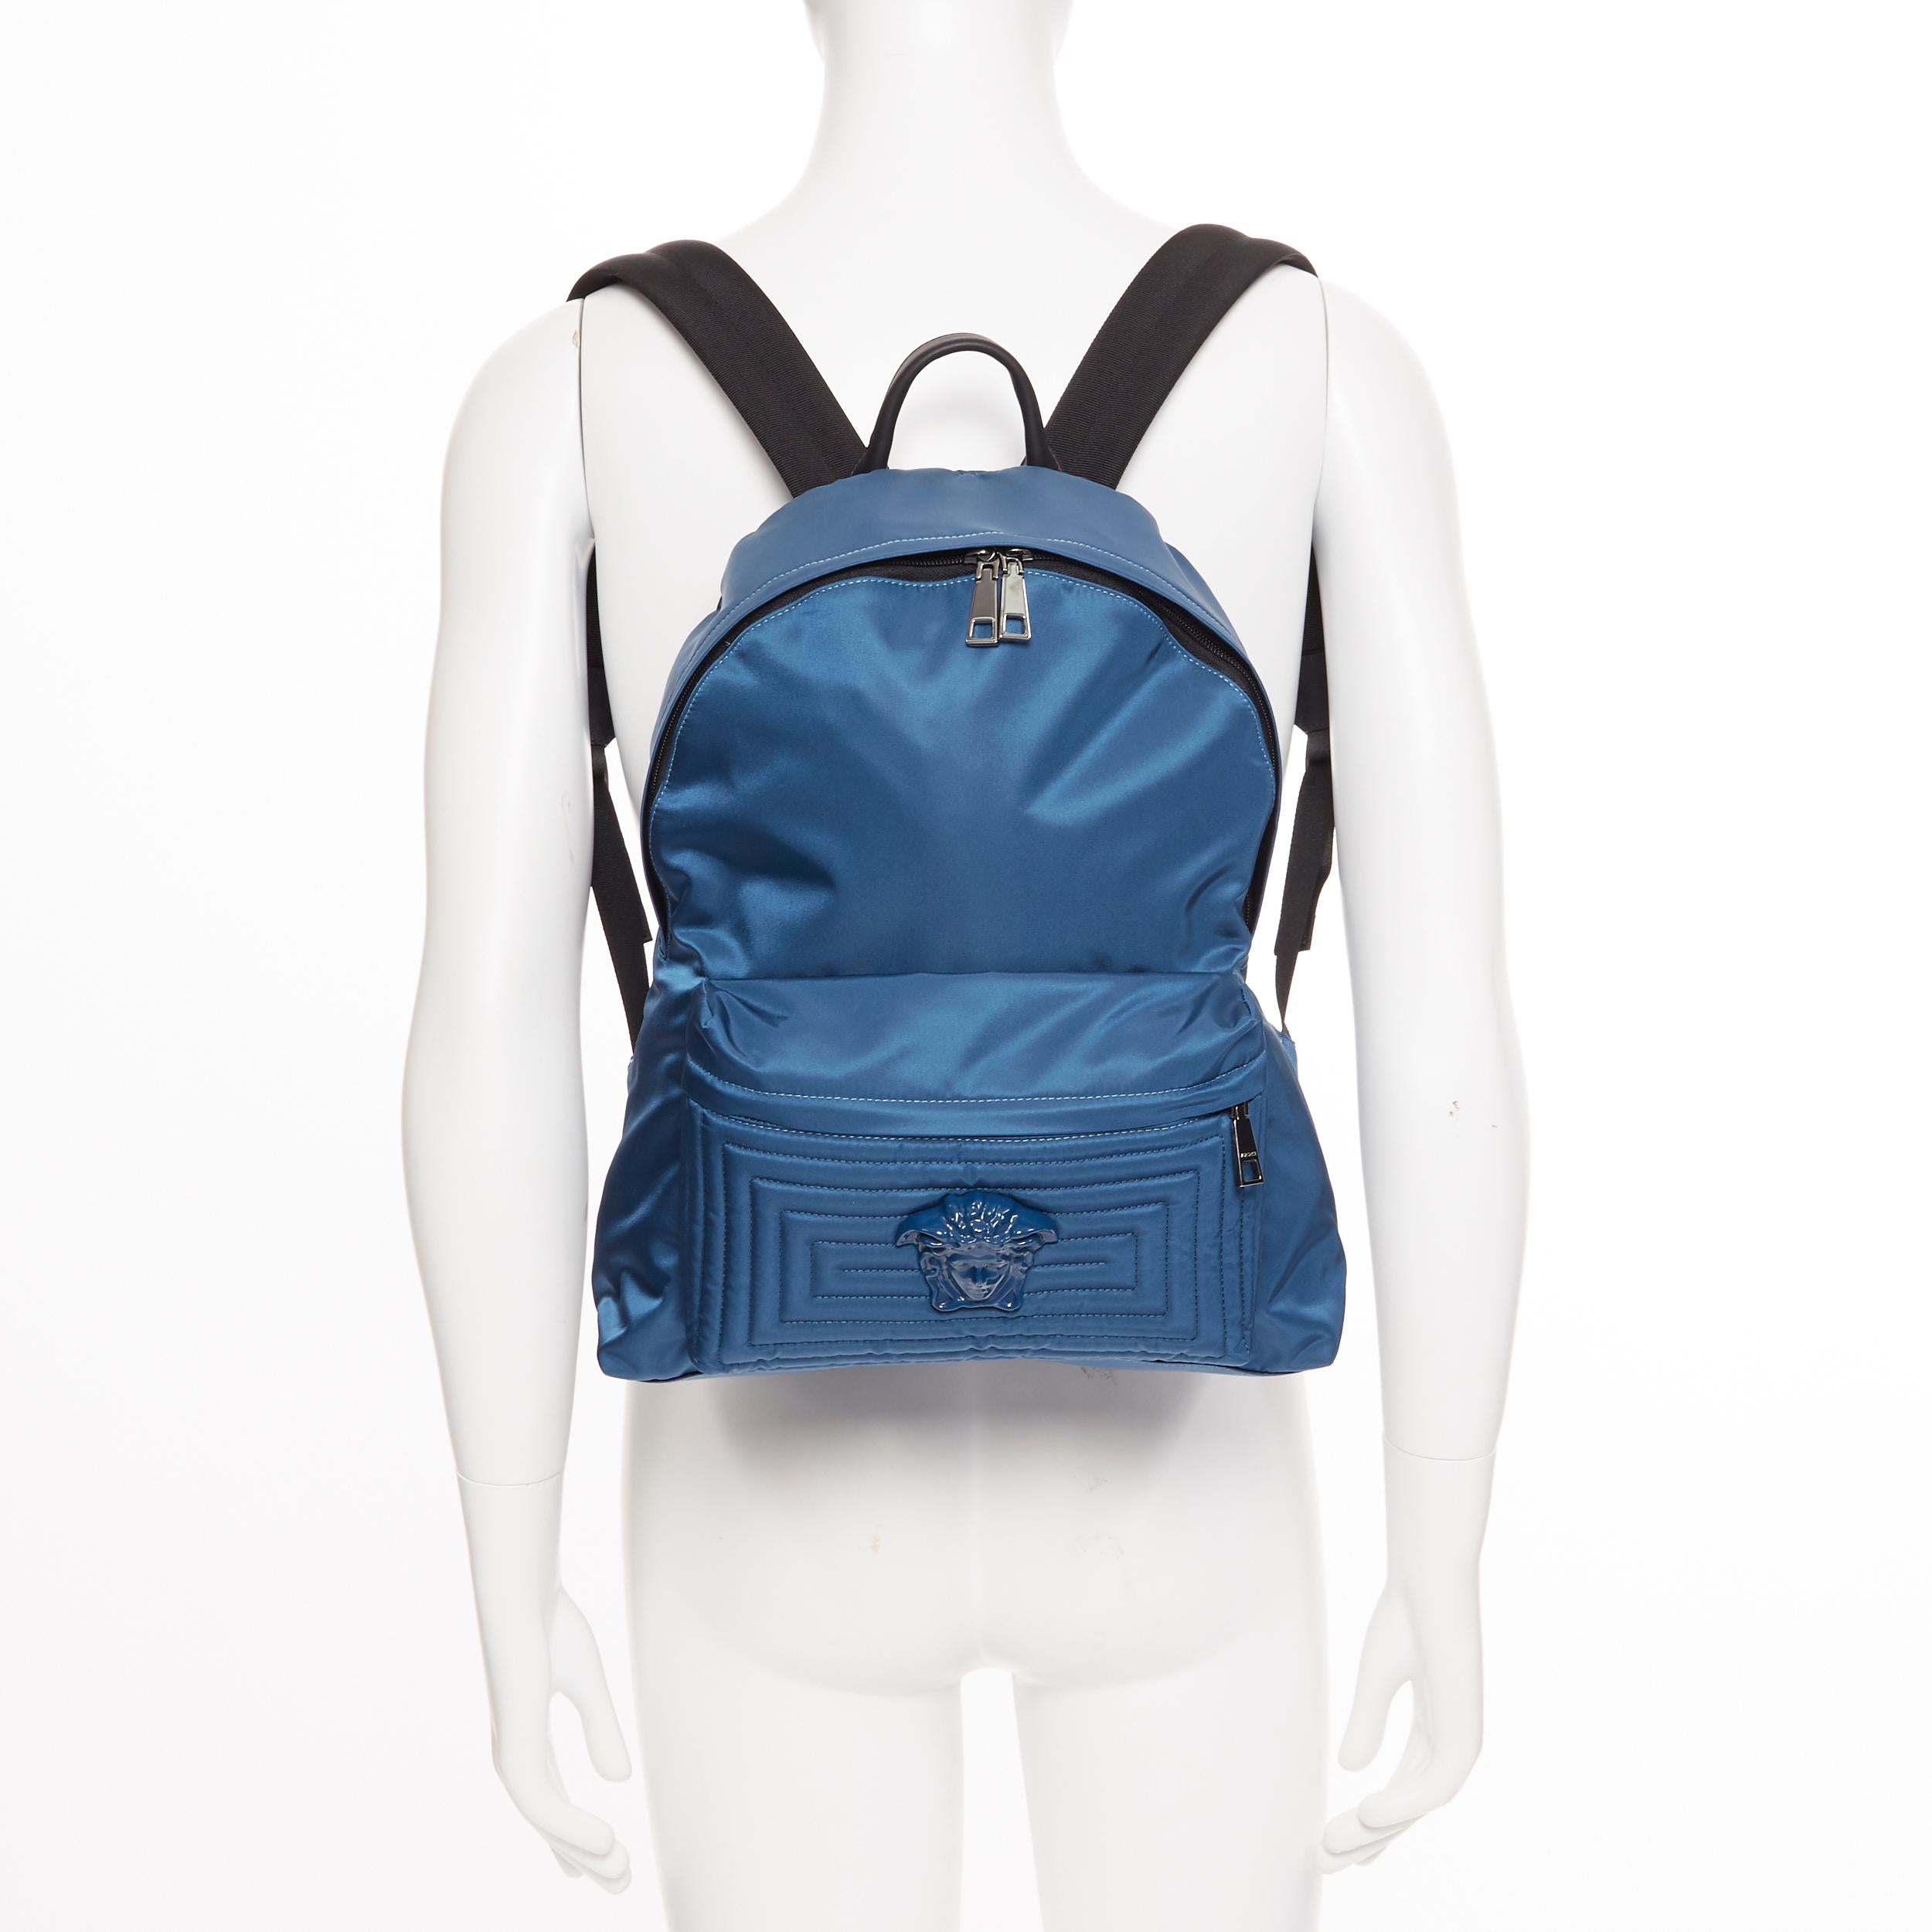 new VERSACE navy blue Palazzo Medusa Greca nylon stitching pocket backpack bag
Brand: Versace
Designer: Donatella Versace
Model Name / Style: Medusa backpack
Material: Nylon
Color: Blue
Pattern: Solid
Closure: Zip
Extra Detail: Black nylon fabric